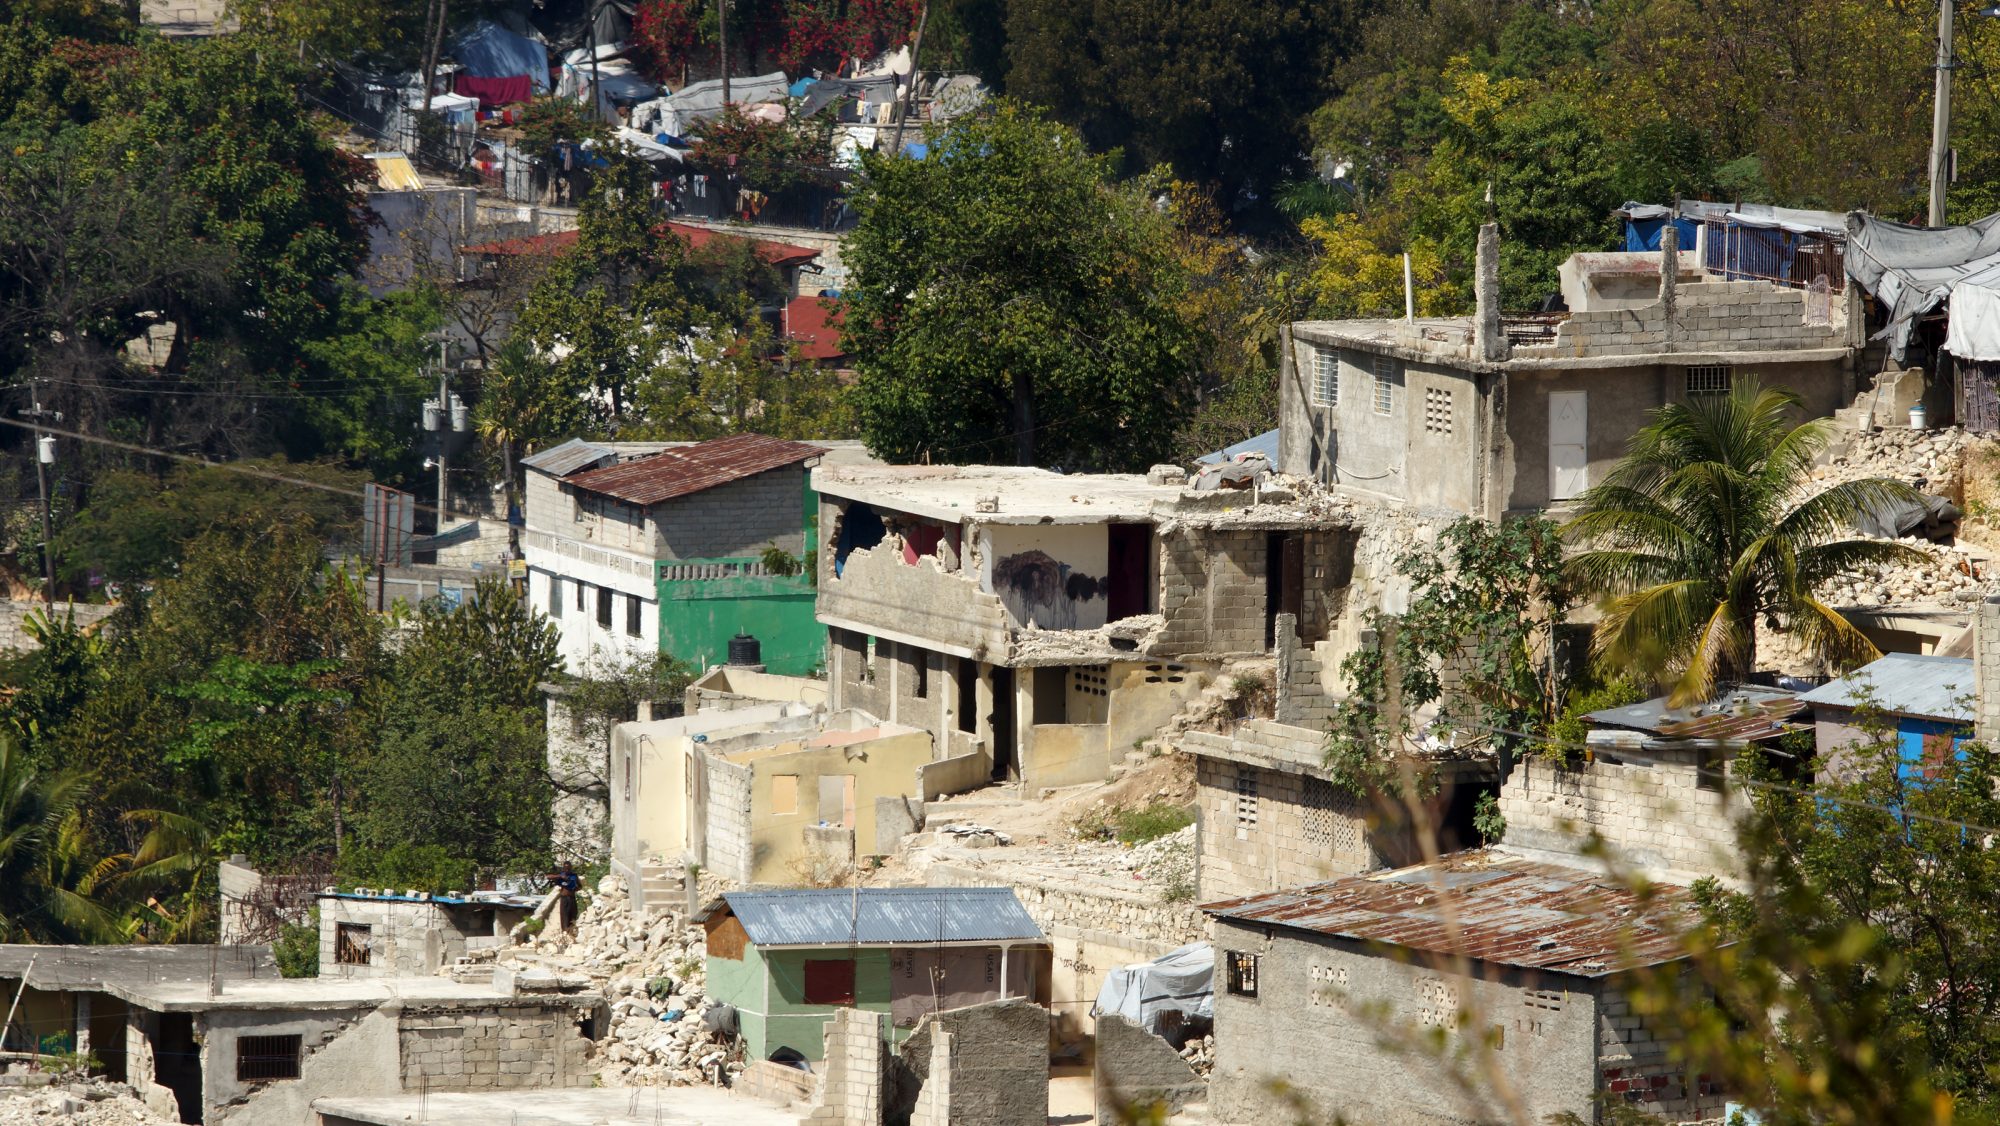 Earthquake consequences in Haiti